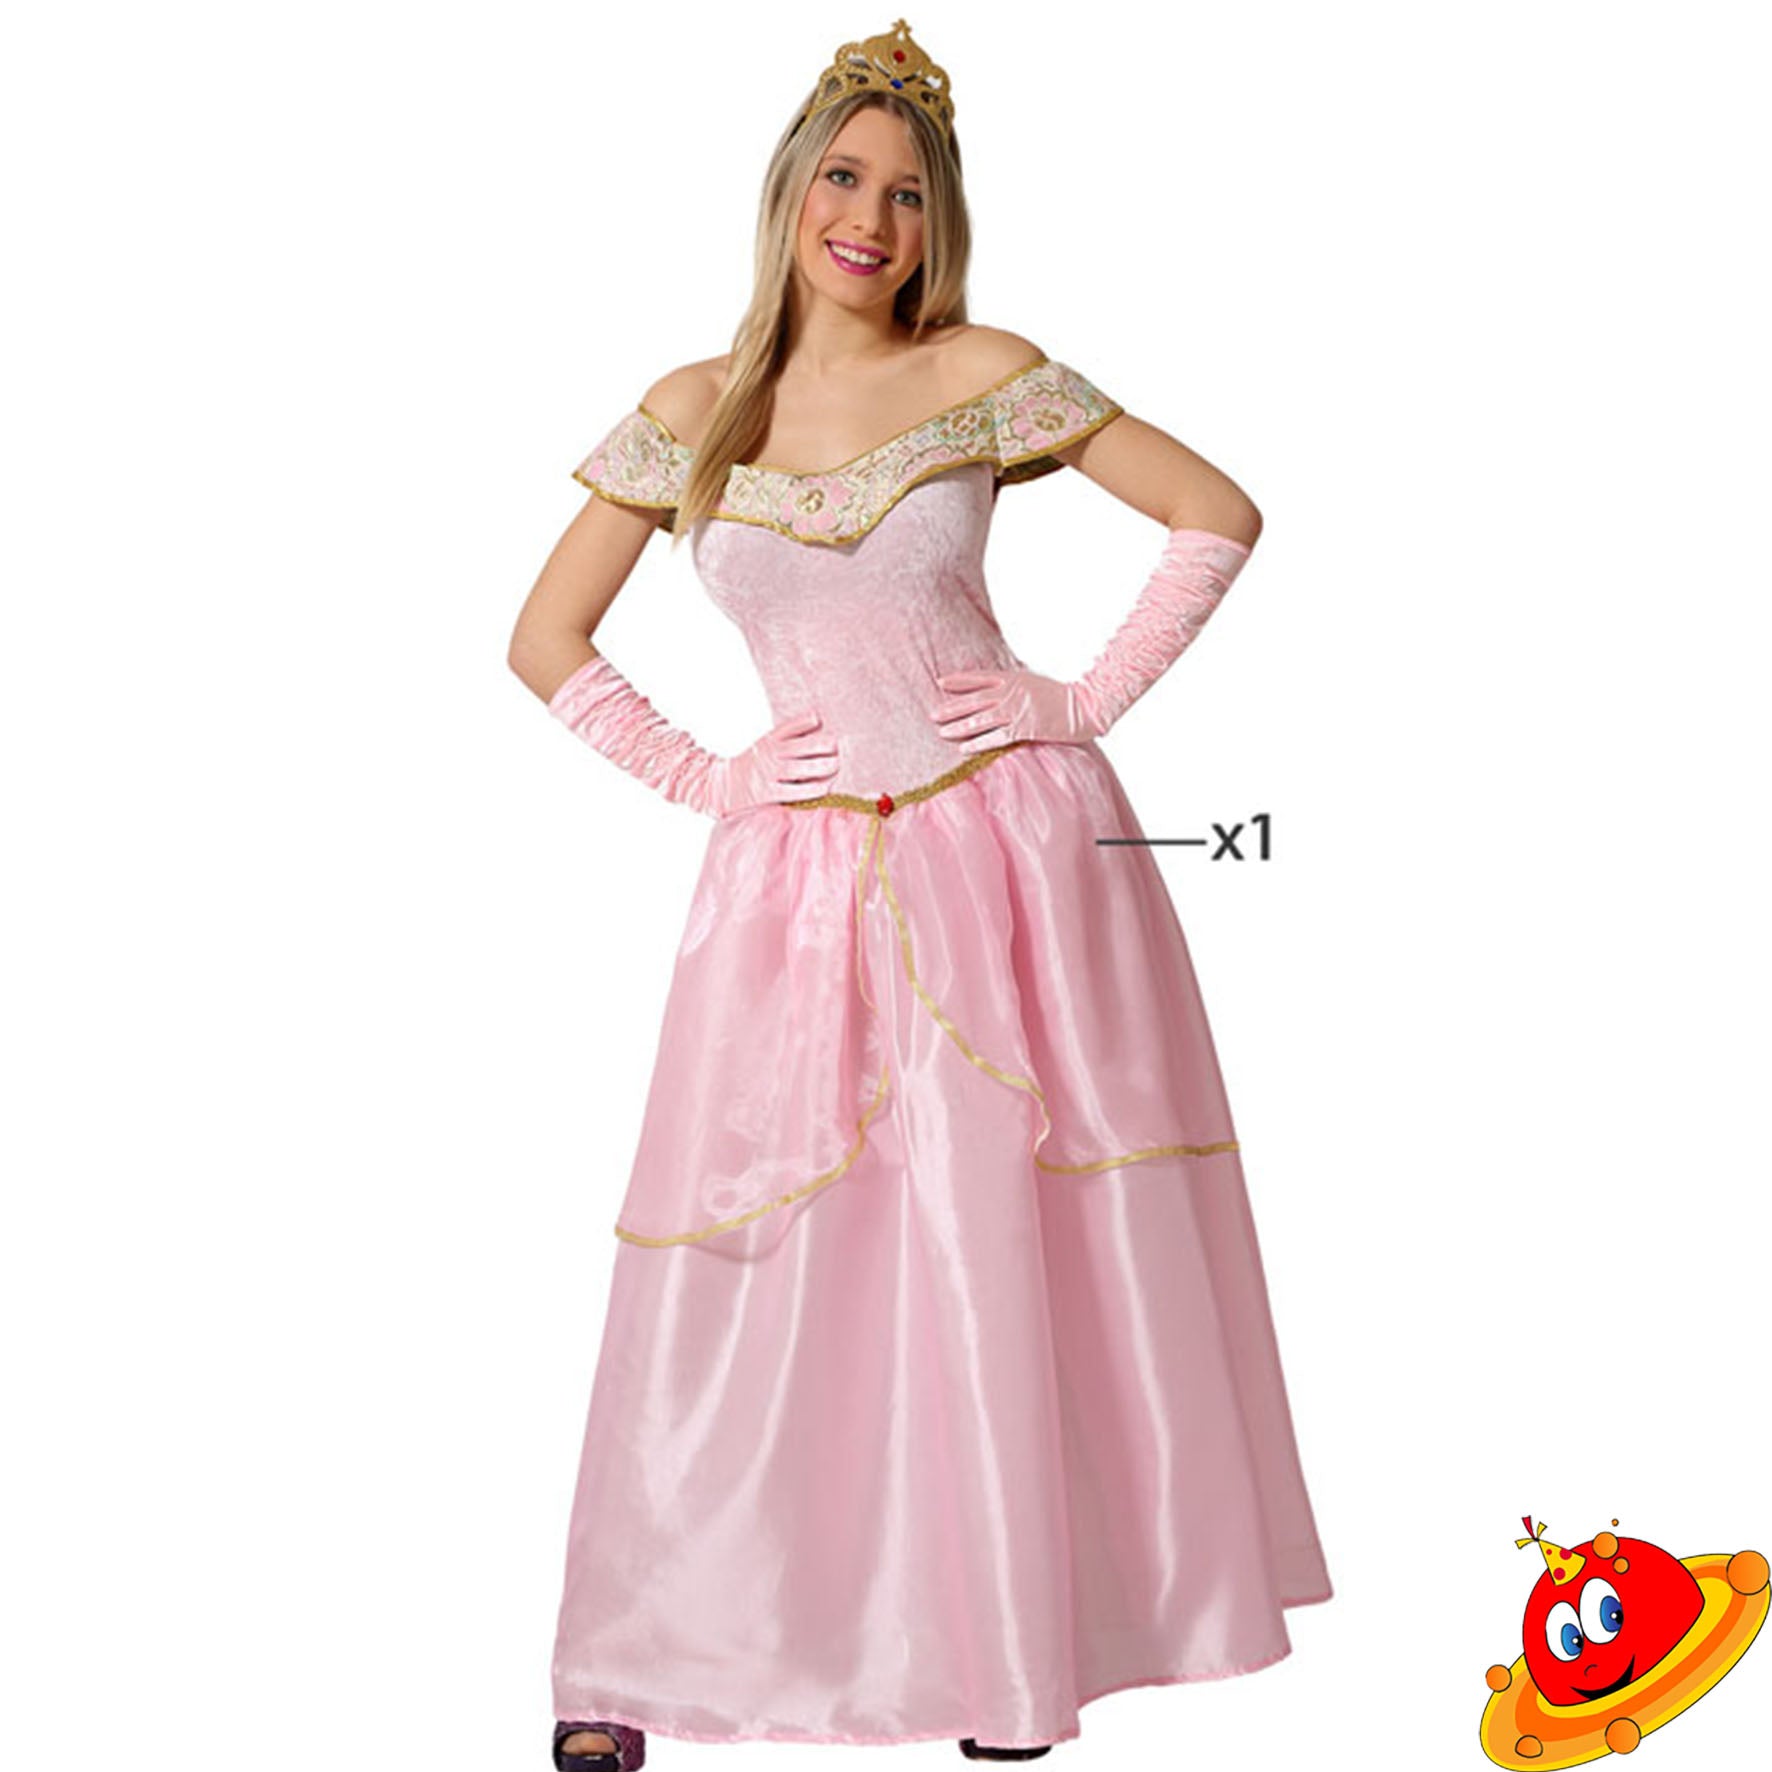 Costume Donna Principessa Cenerentola Rosa Tg 36/46